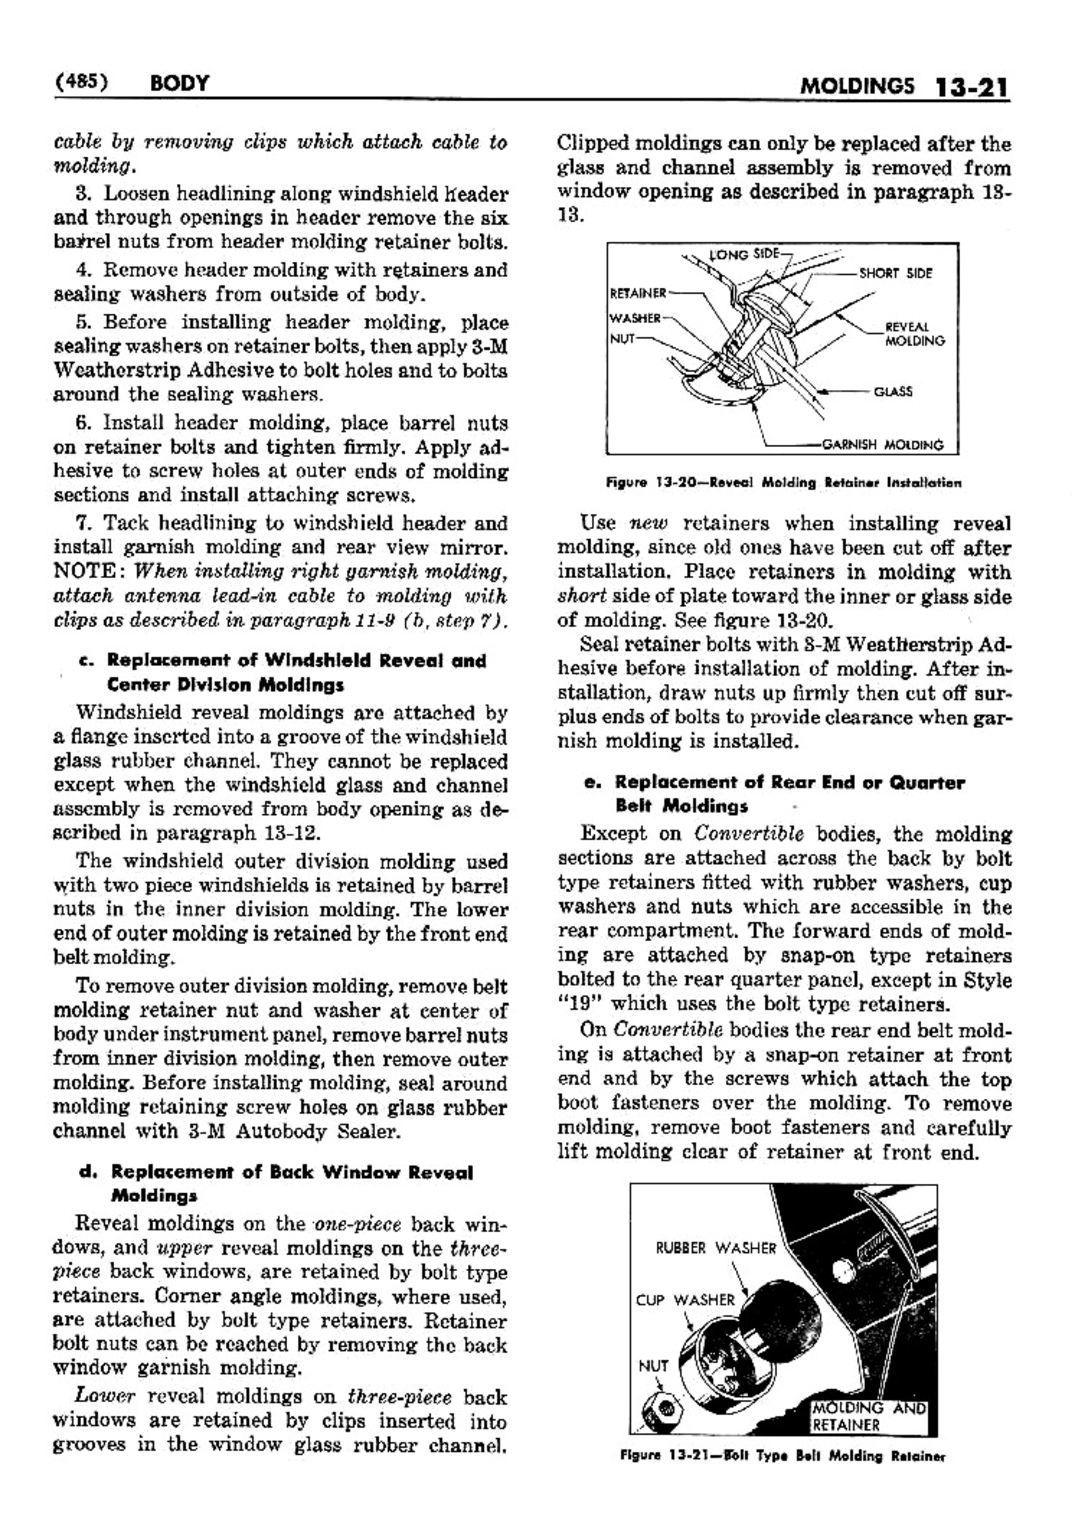 n_14 1952 Buick Shop Manual - Body-021-021.jpg